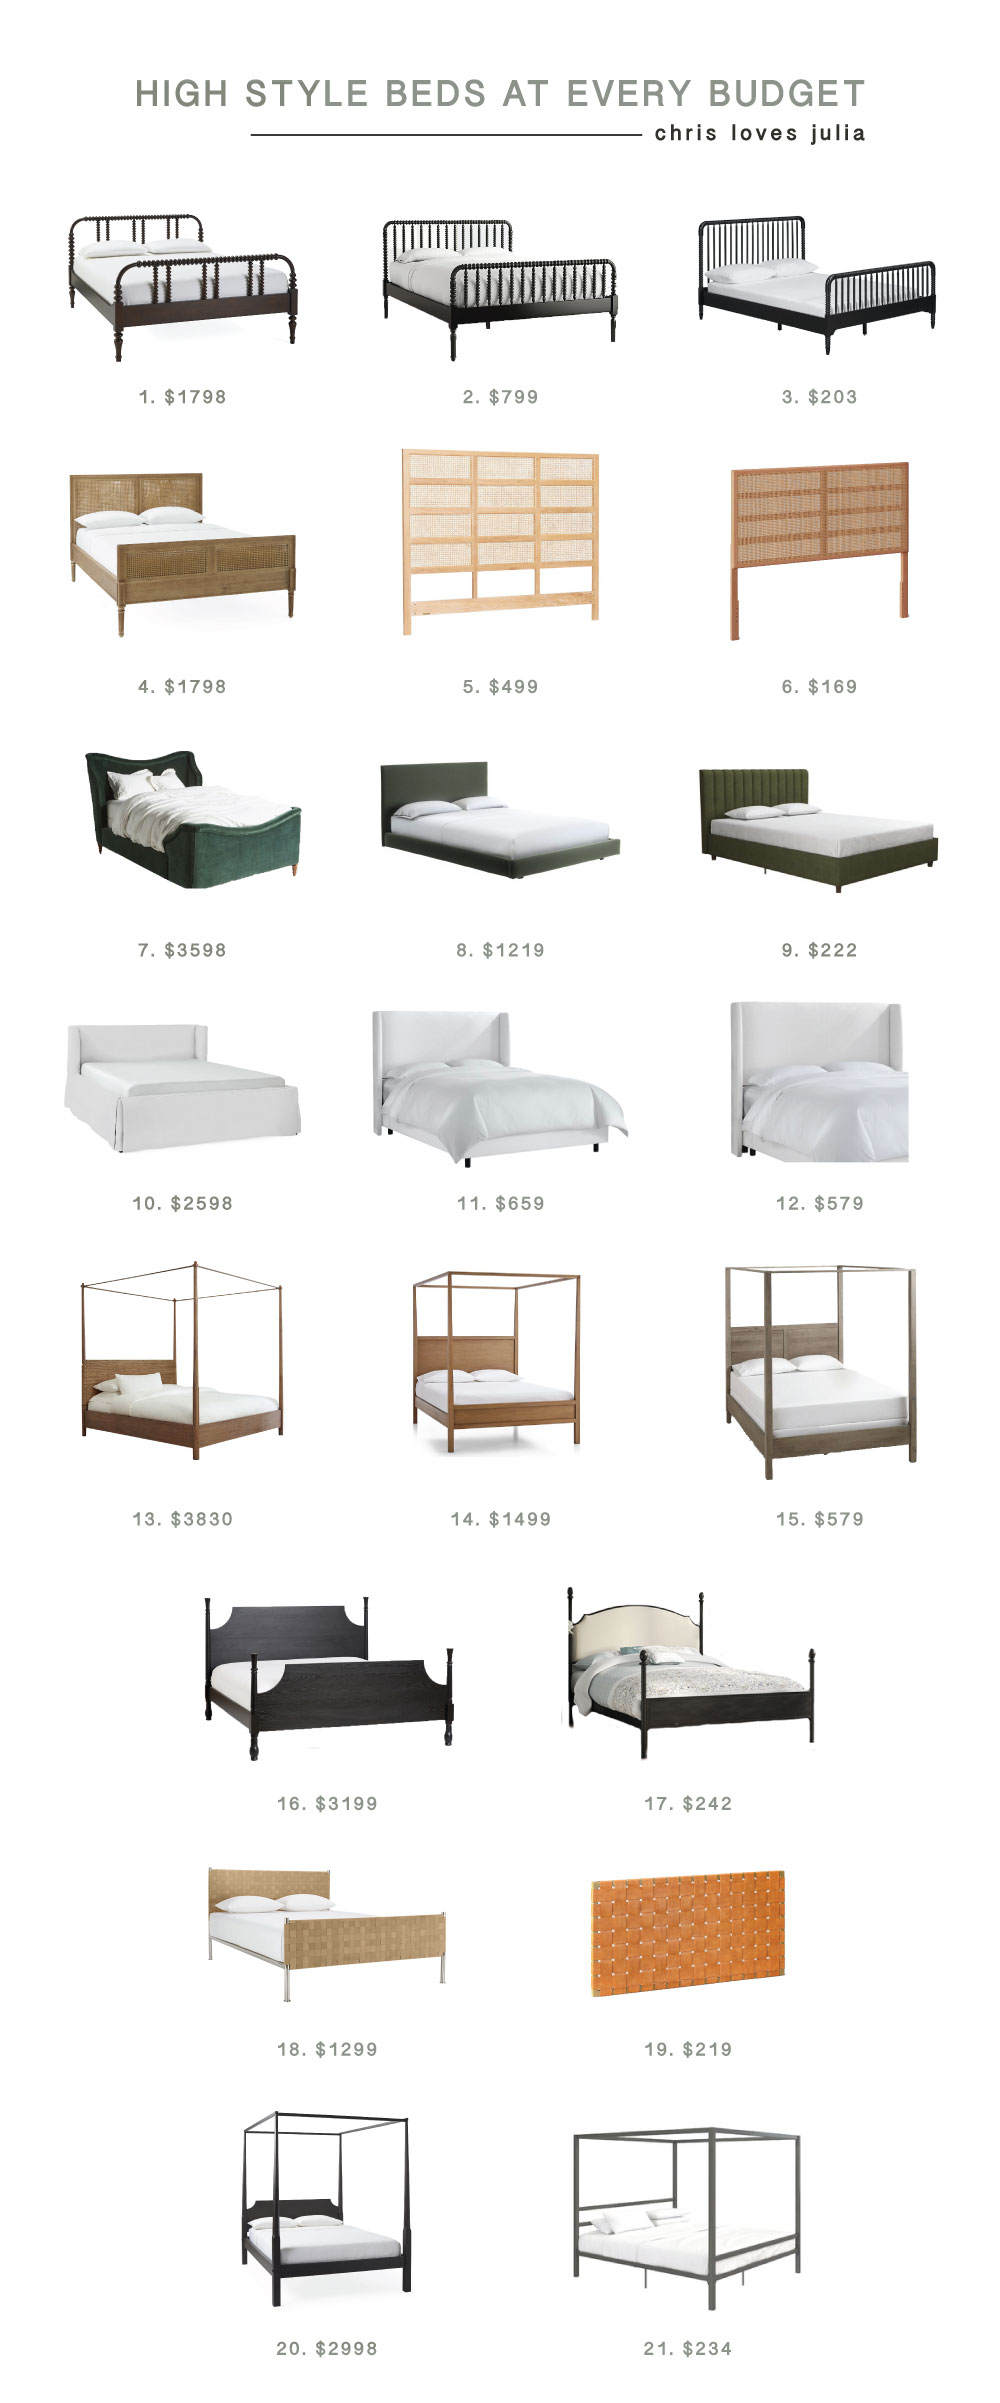 https://www.chrislovesjulia.com/wp-content/uploads/2019/06/high-style-beds-at-every-budget.jpg